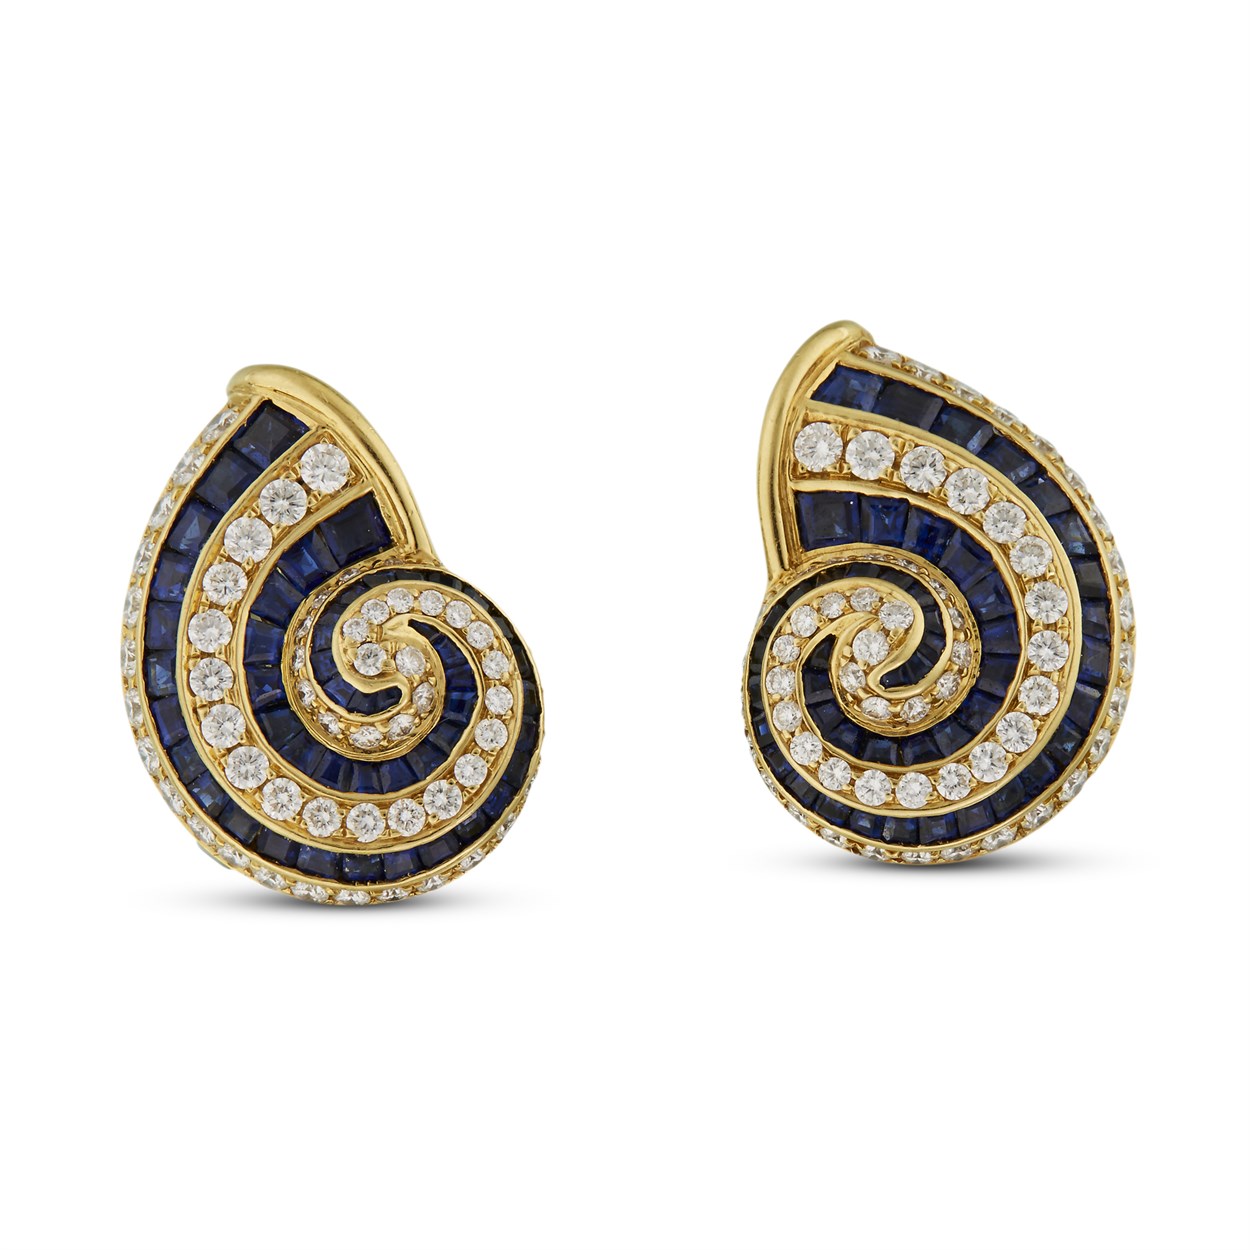 Lot 47 - A pair of diamond, sapphire and eighteen karat gold earrings, Tiffany & Co.